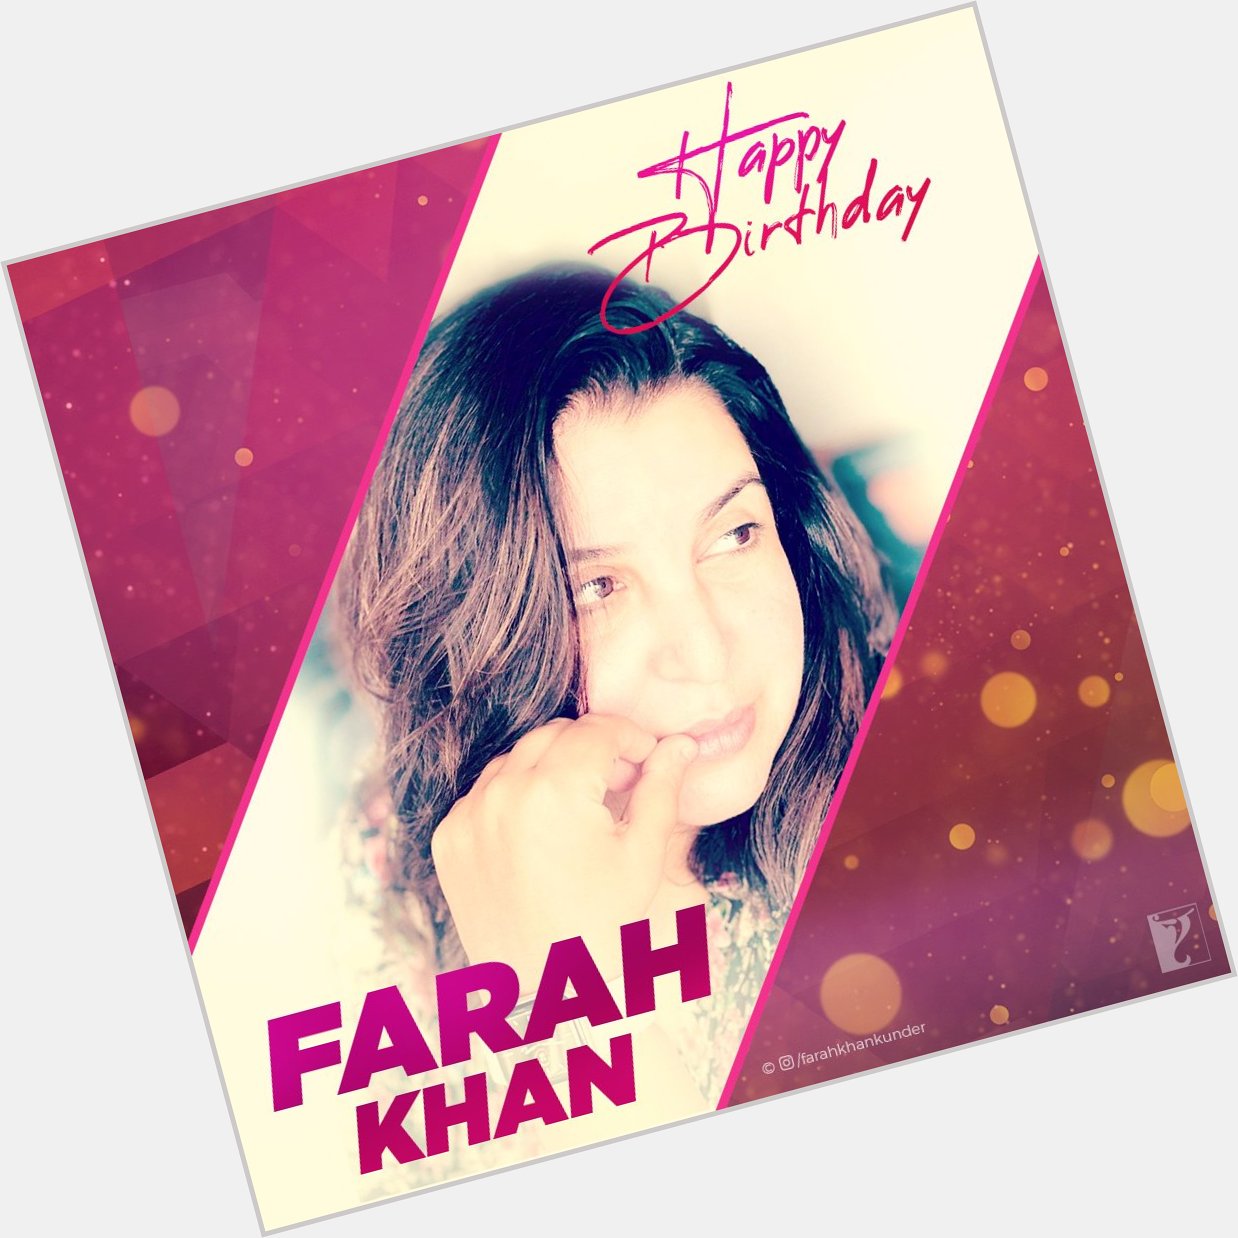 Happy birthday to Farah Khan - Main Hoon Na and Om Shanti Om are two classics that I absolutely love  